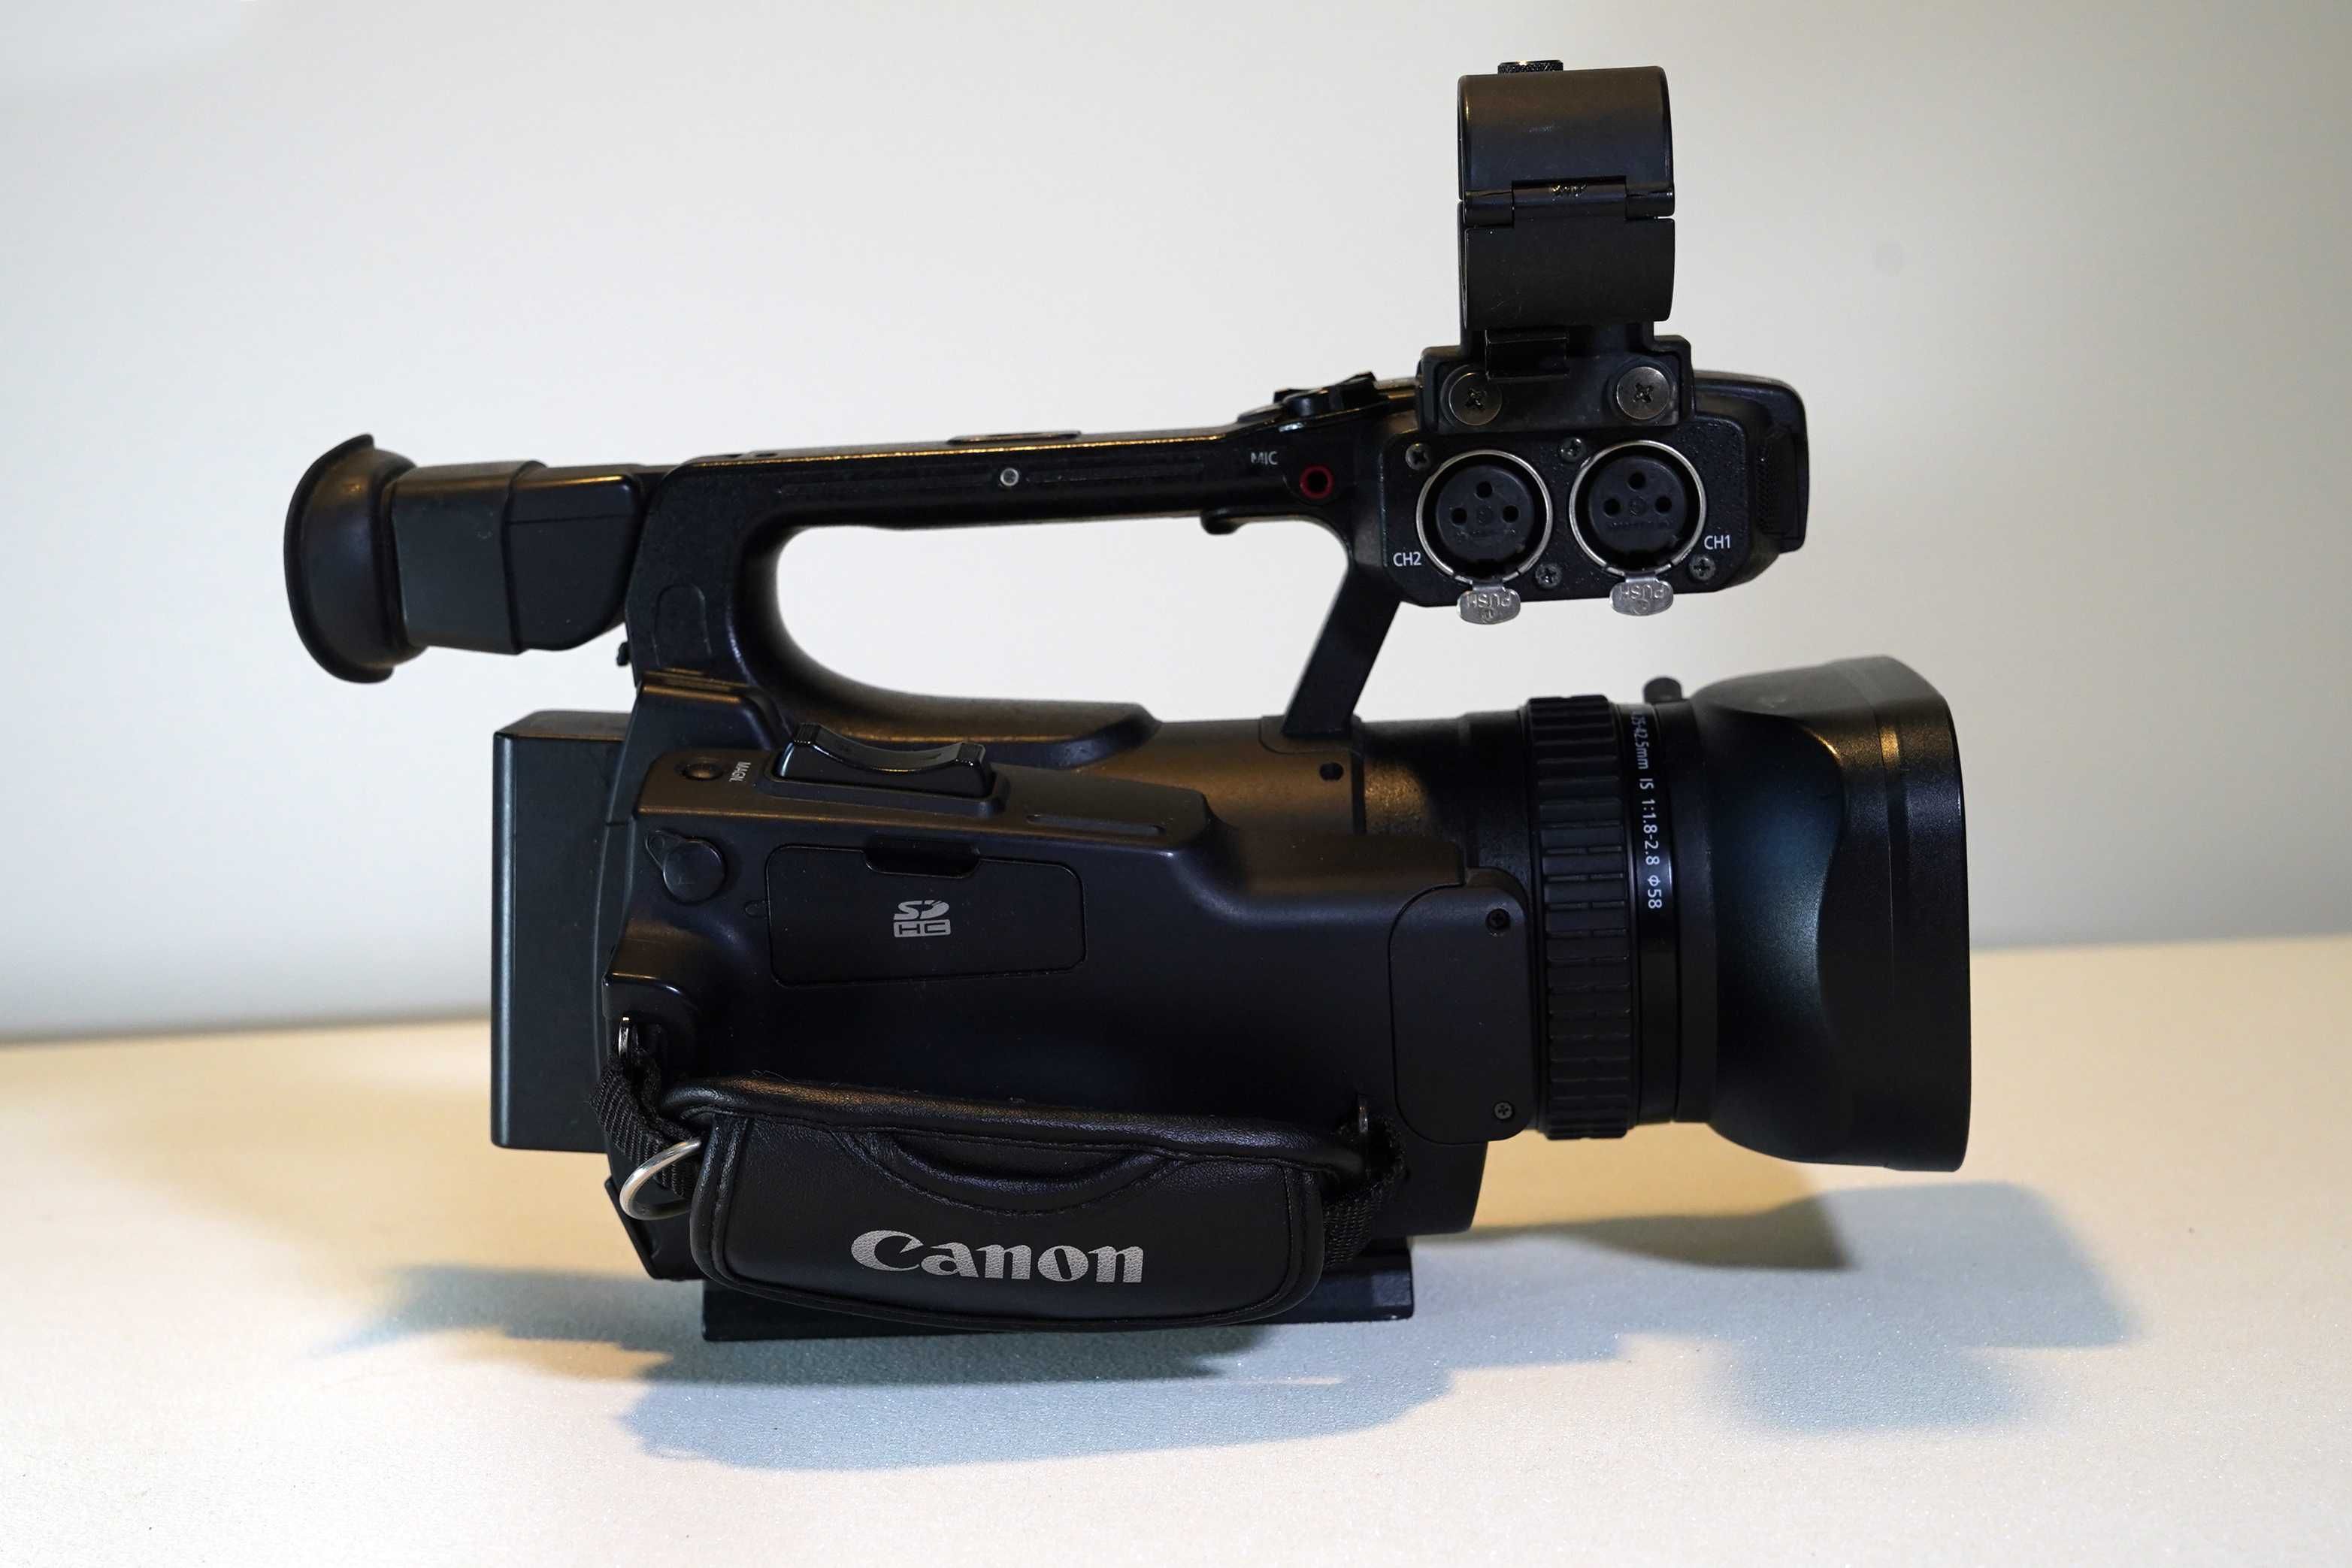 Kamera Canon XF100